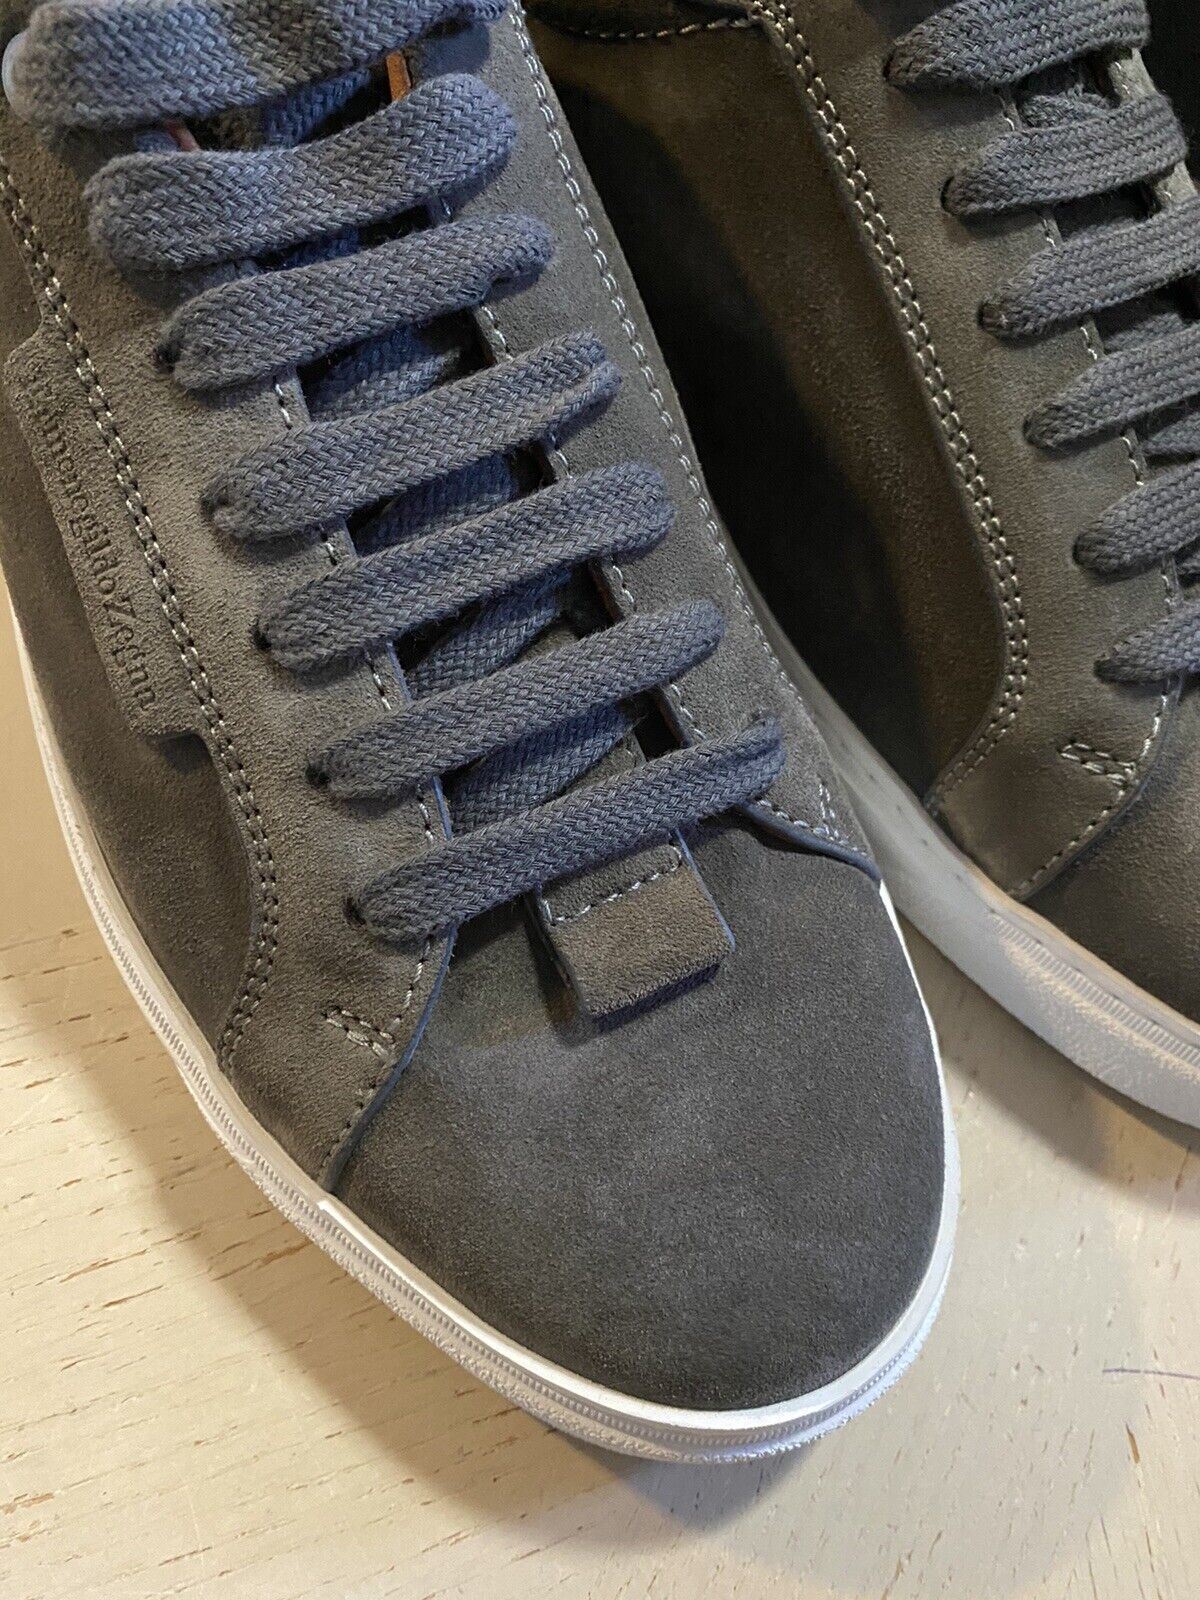 New $495 Ermenegildo Zegna Suede Sneakers Shoes DK Gray 12 US Italy